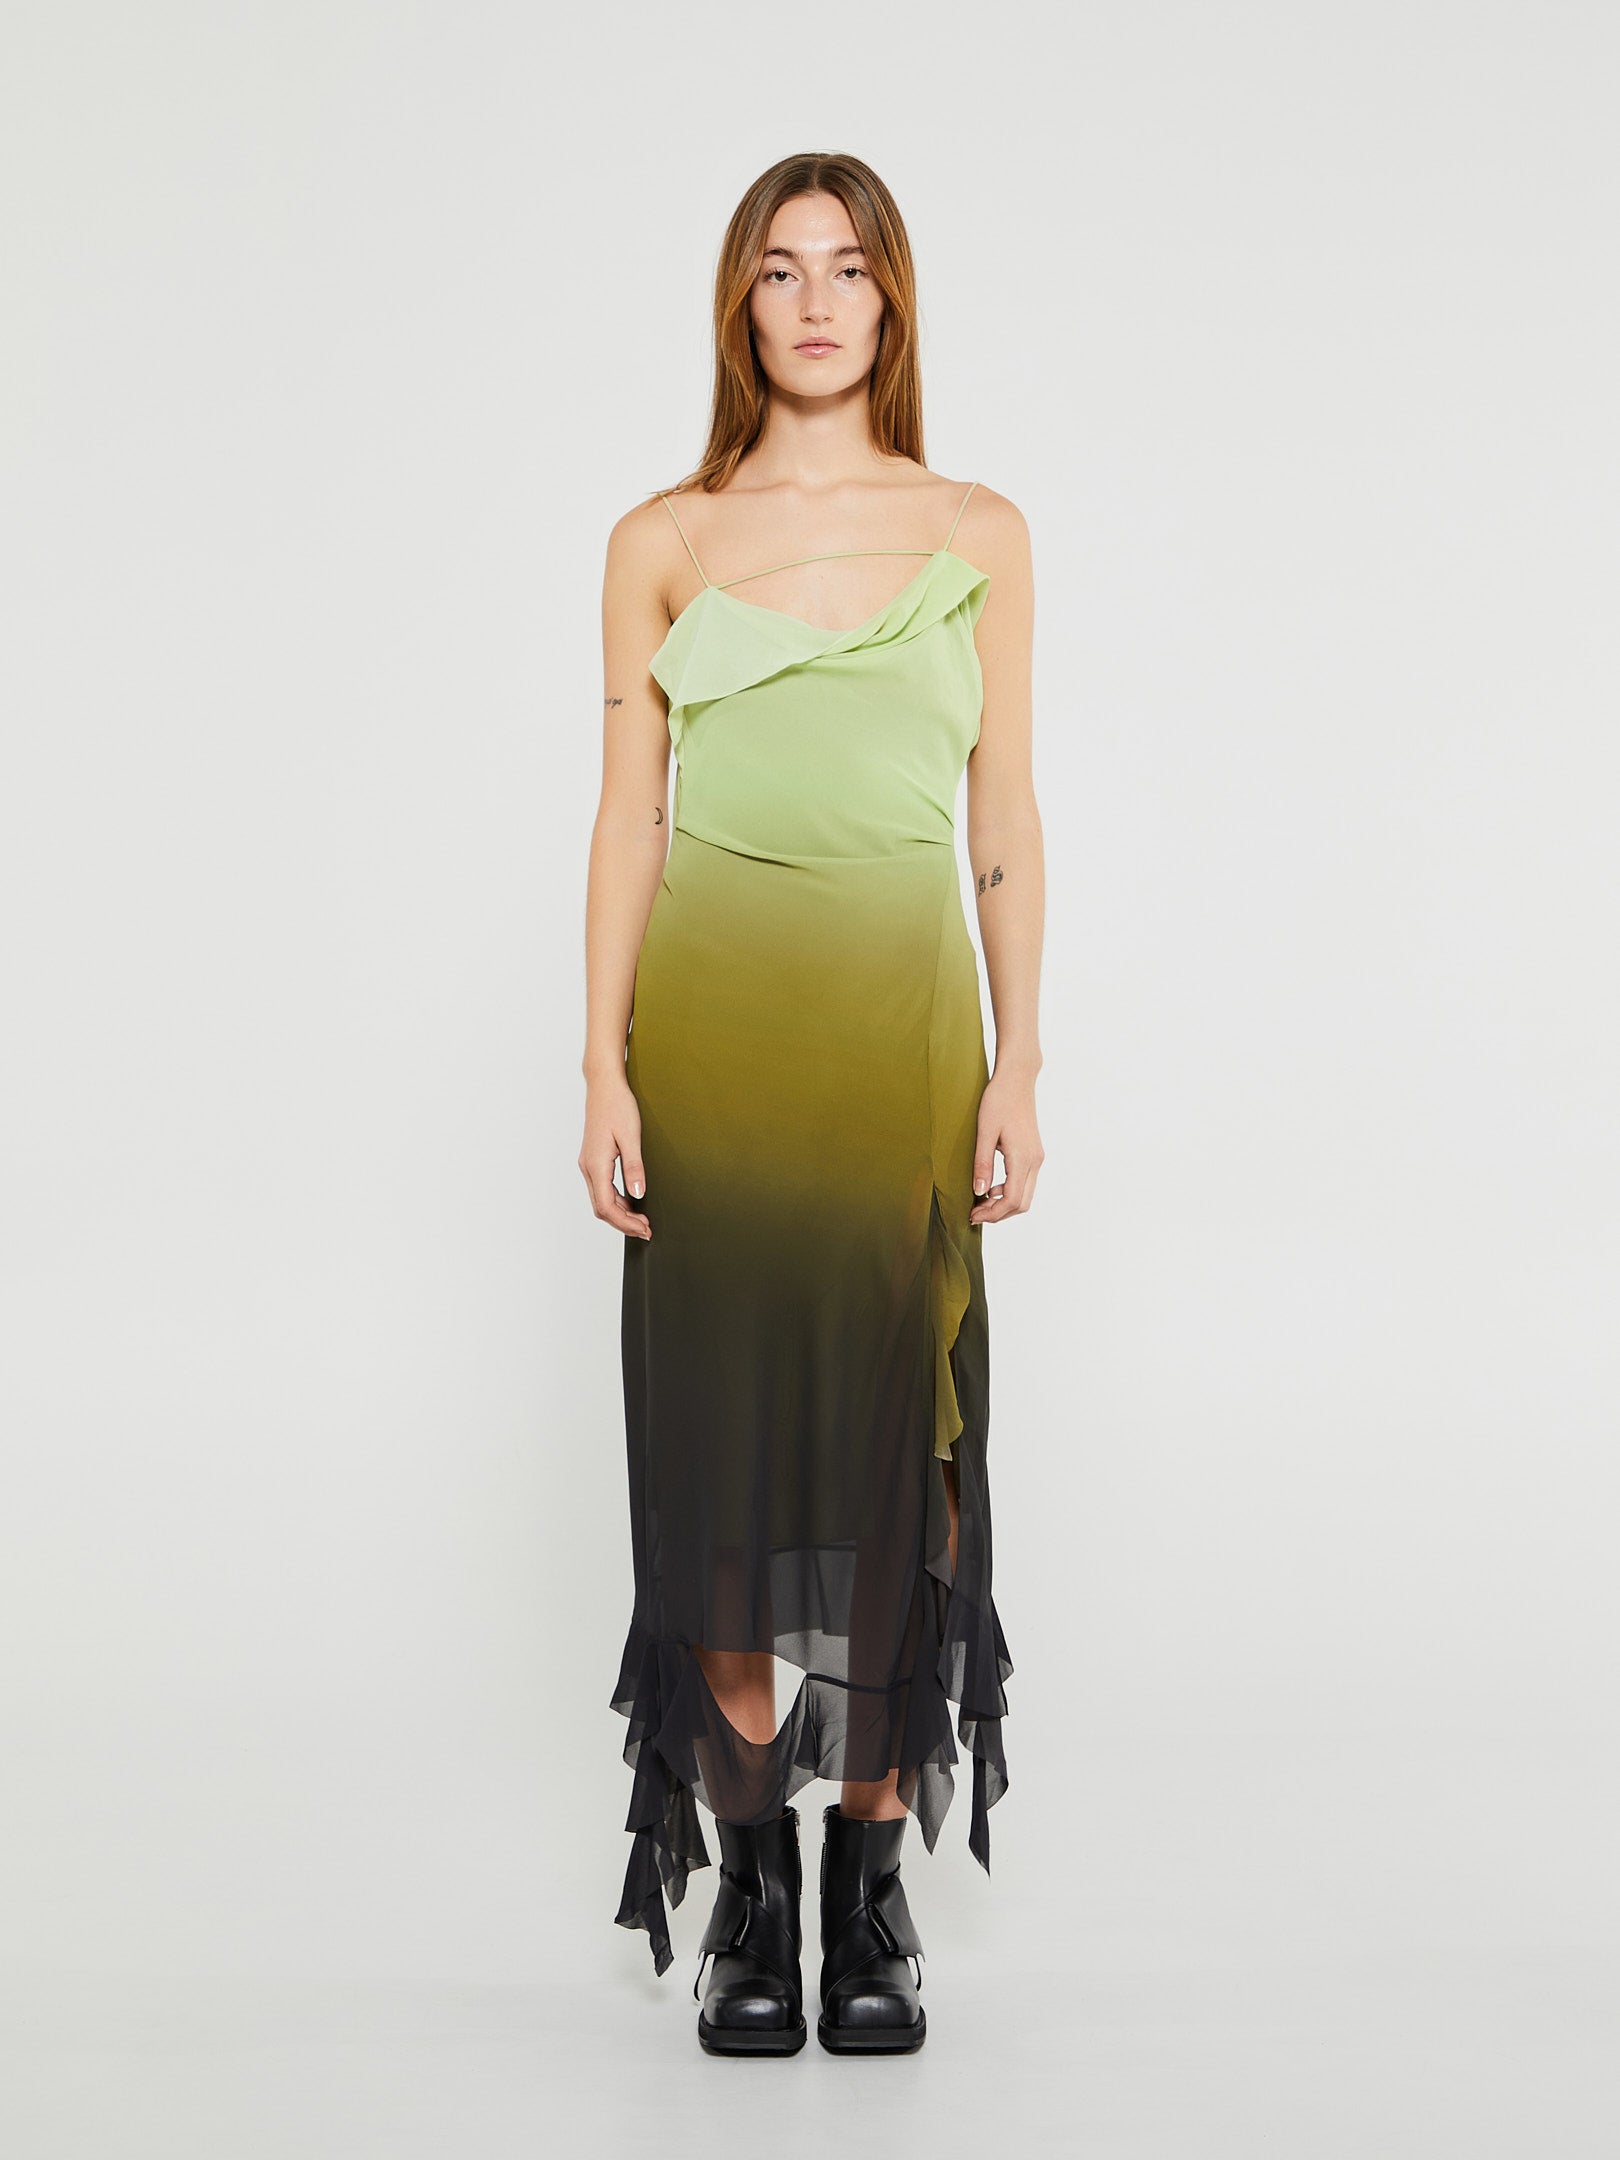 Acne Studios - Ruffle Strap Dress in Green